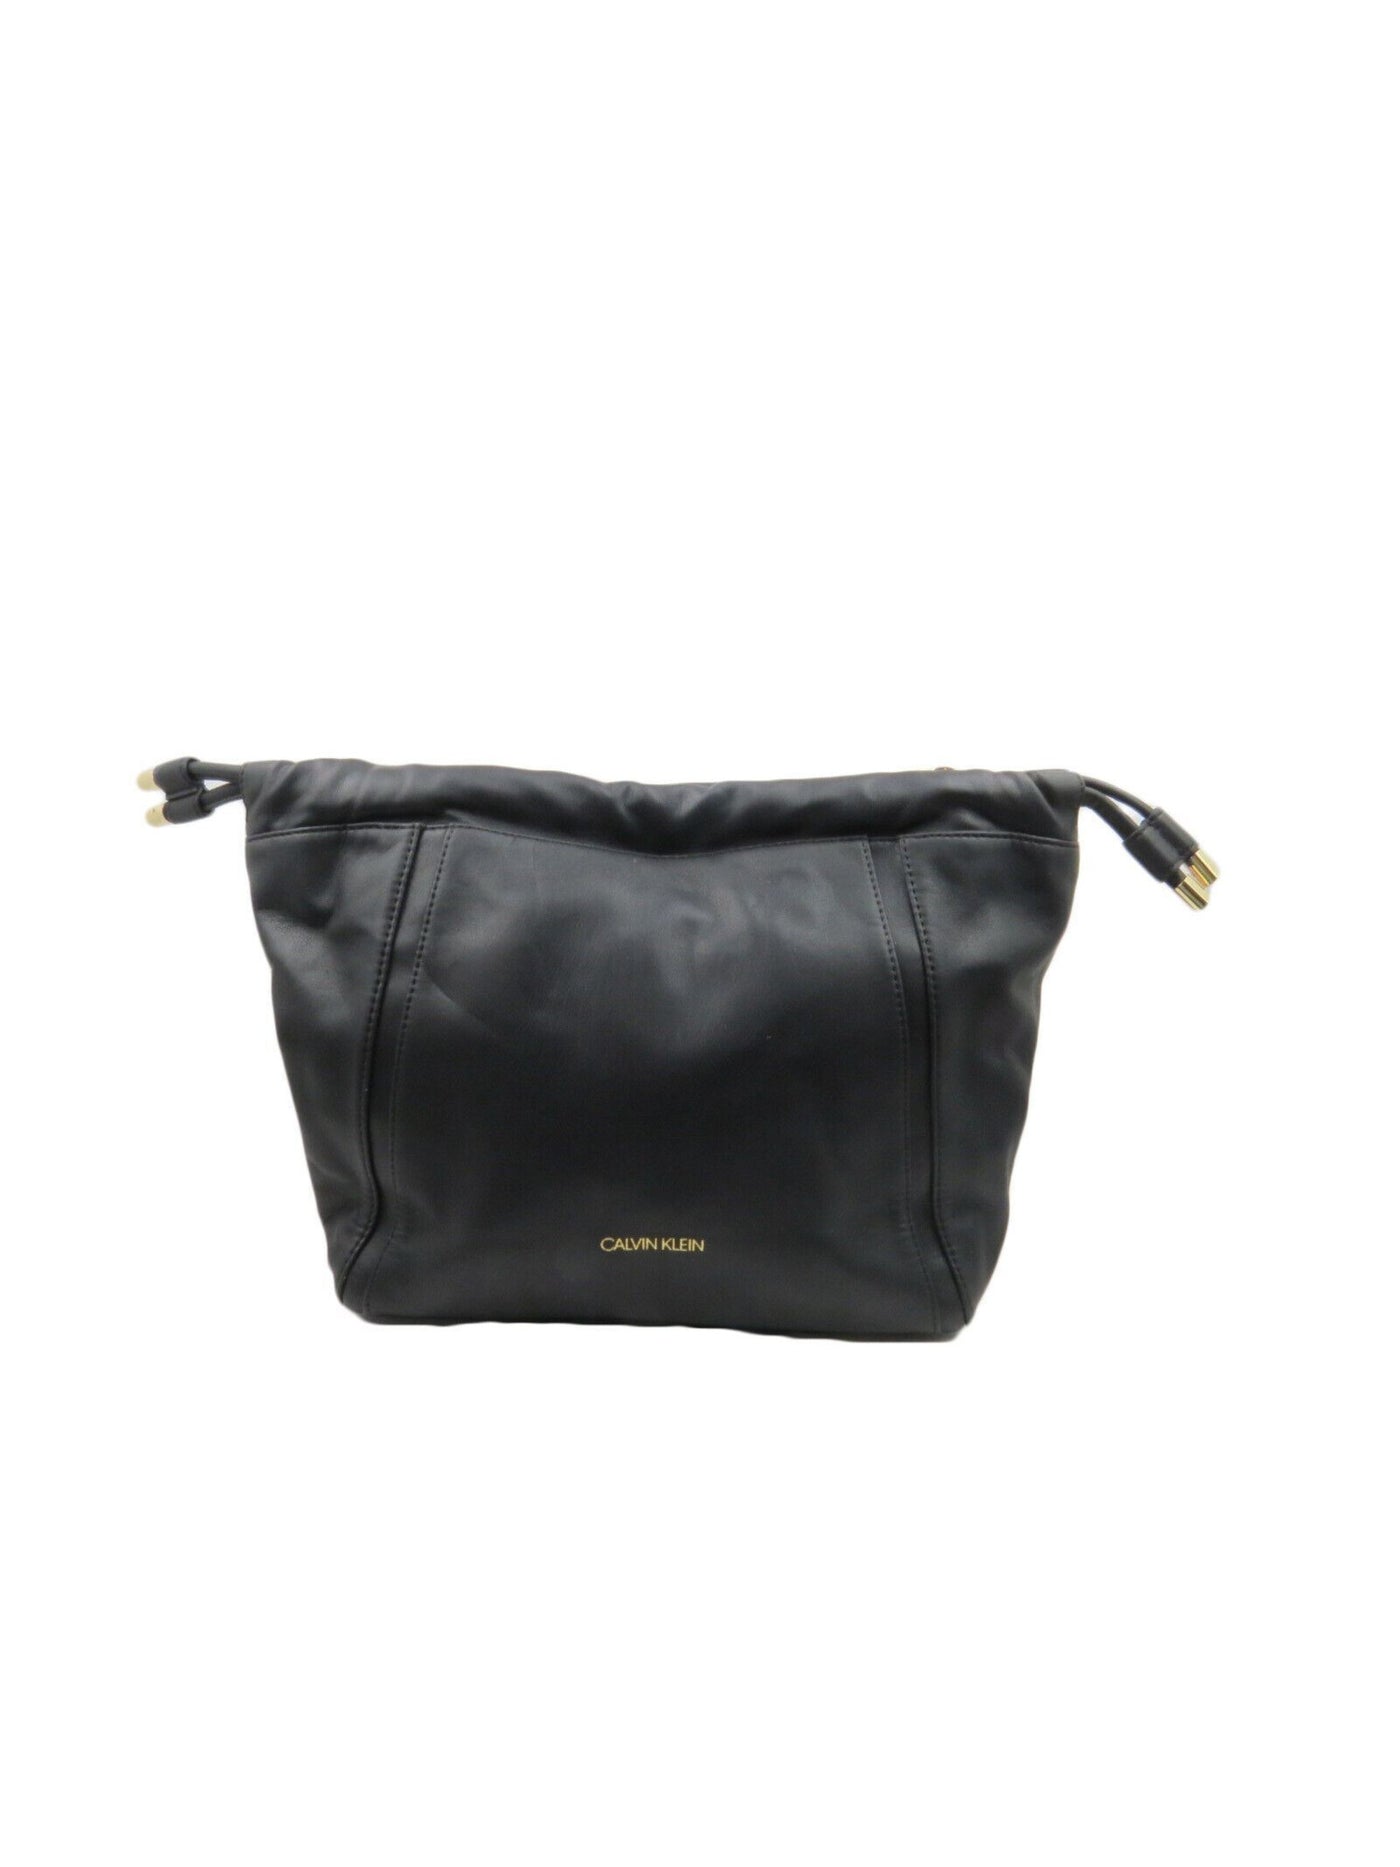 CALVIN KLEIN Women's Black Sienna Solid Nylon Drawstring Double Flat Strap Tote Handbag Purse